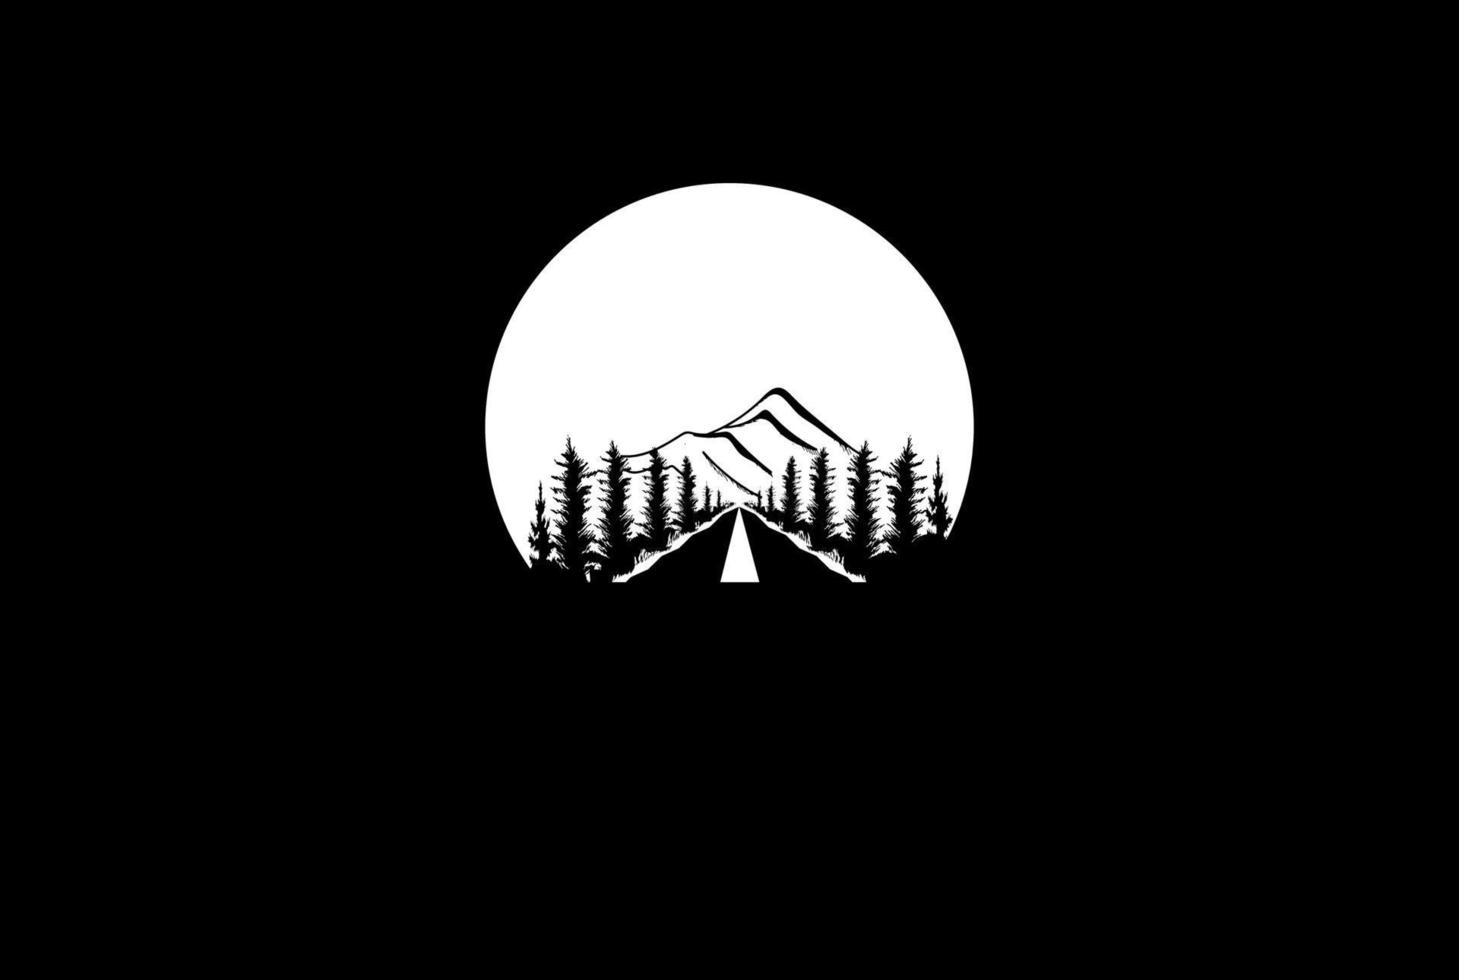 weg straat manier met bergpijnboom groenblijvende spar naaldboom cipres lariks bomen bos logo ontwerp vector